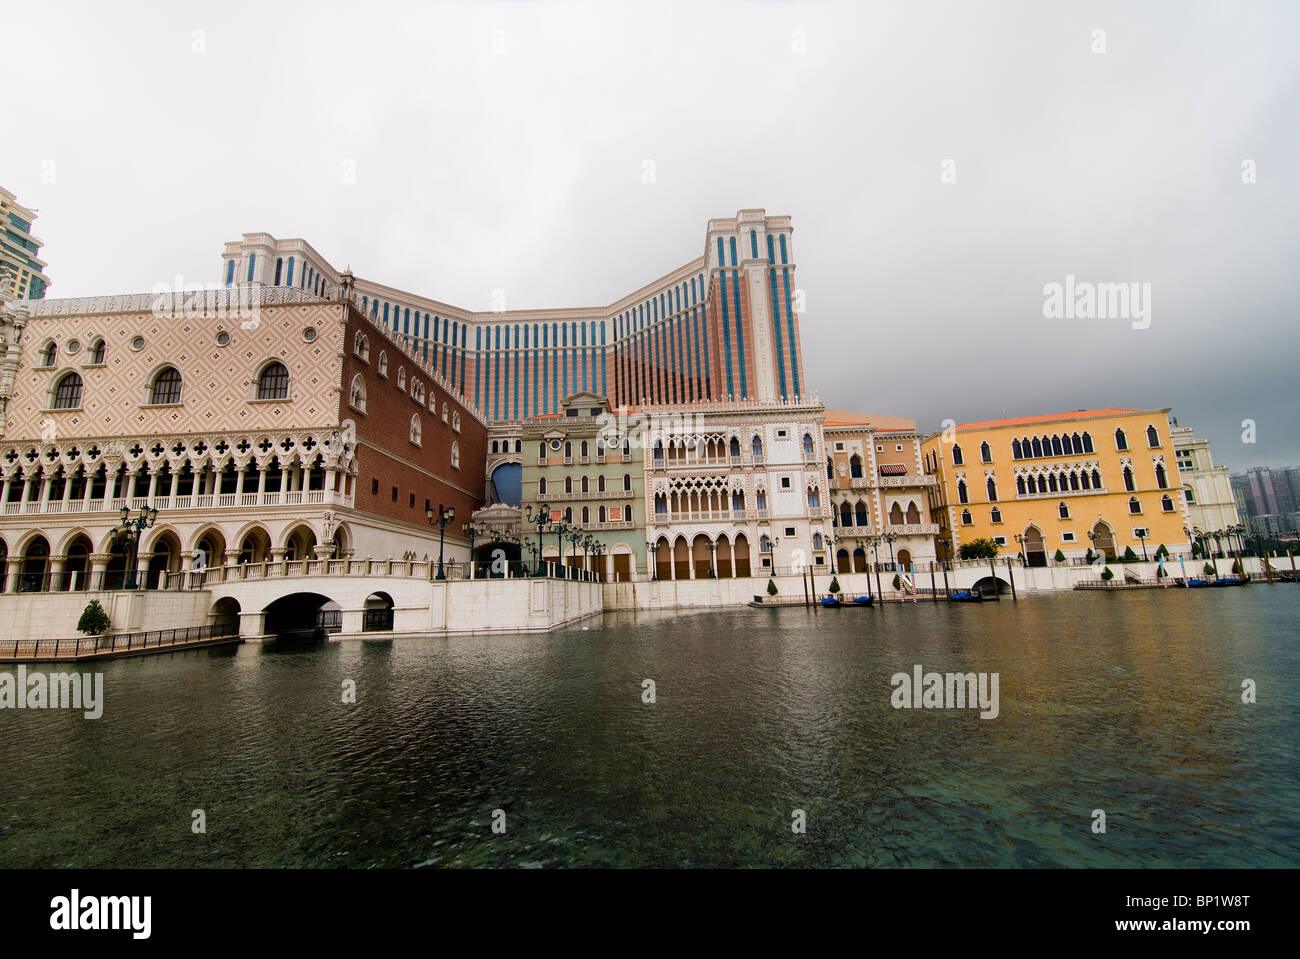 The beautiful Venetian hotel and casino in Macau. Stock Photo